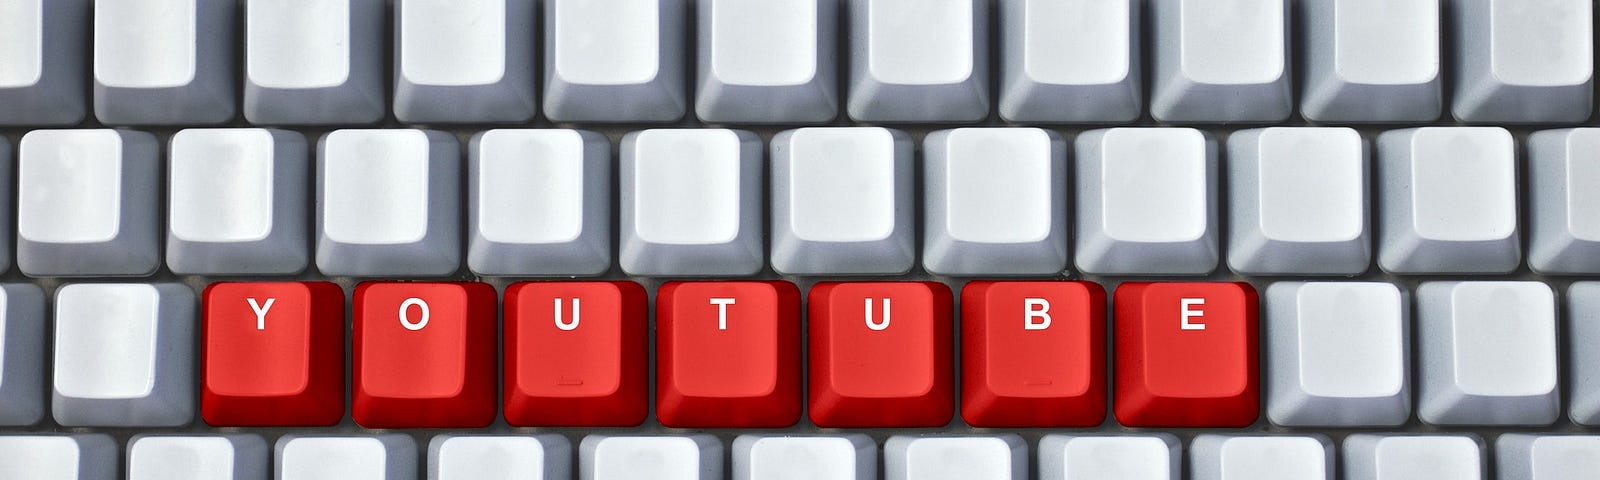 Computer keyboard showing red keys spelling Youtube